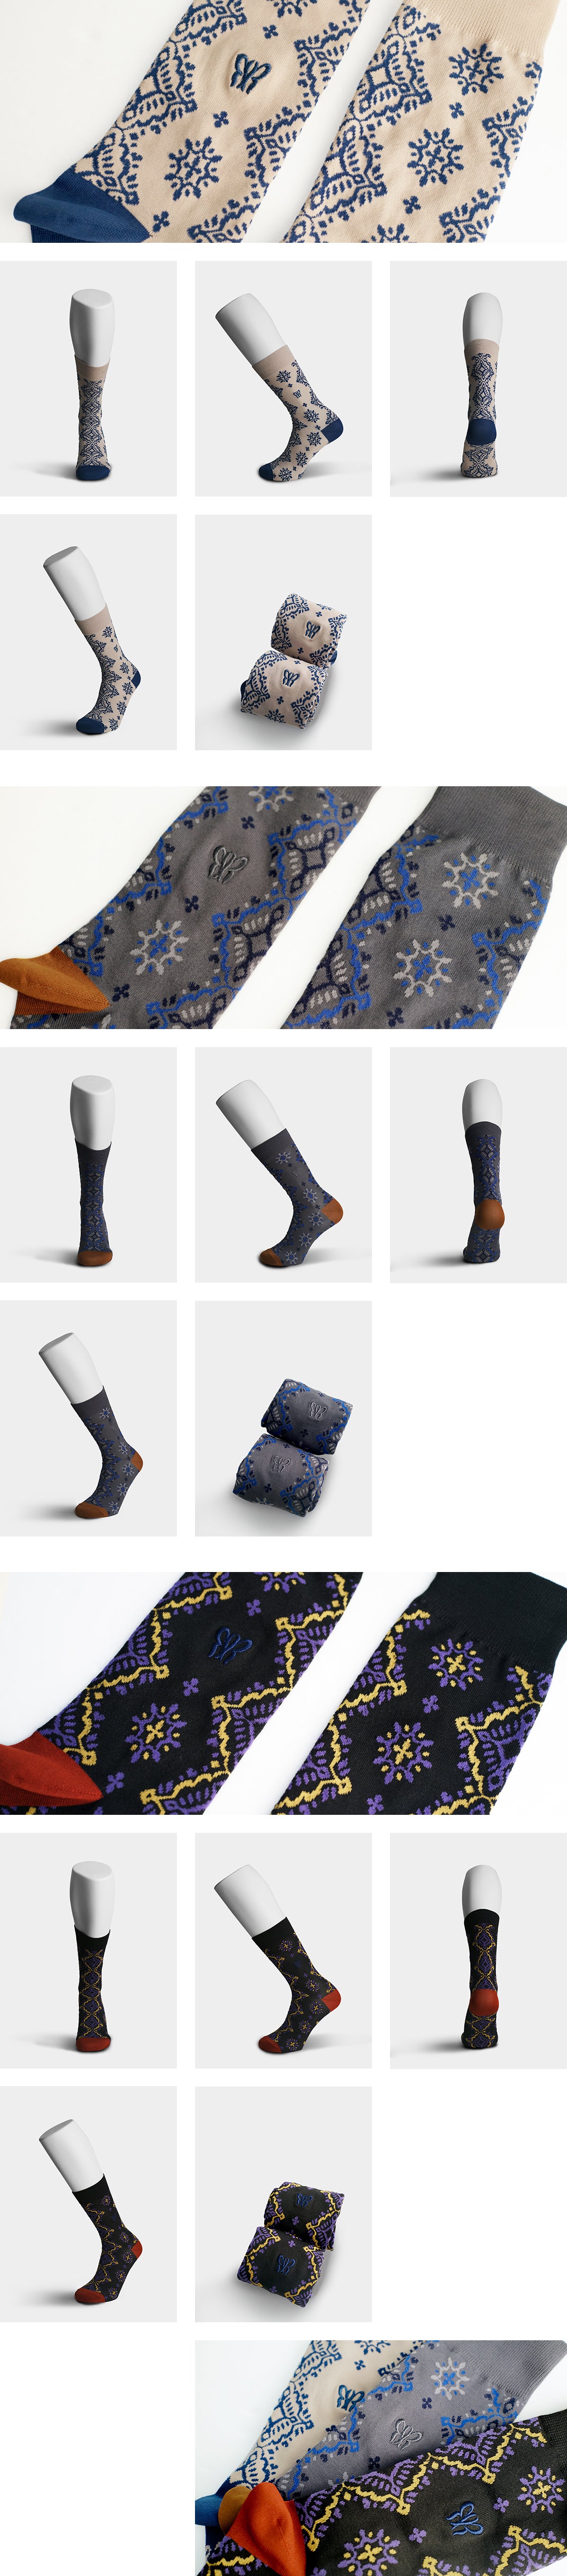 Embroidered socks (Man)